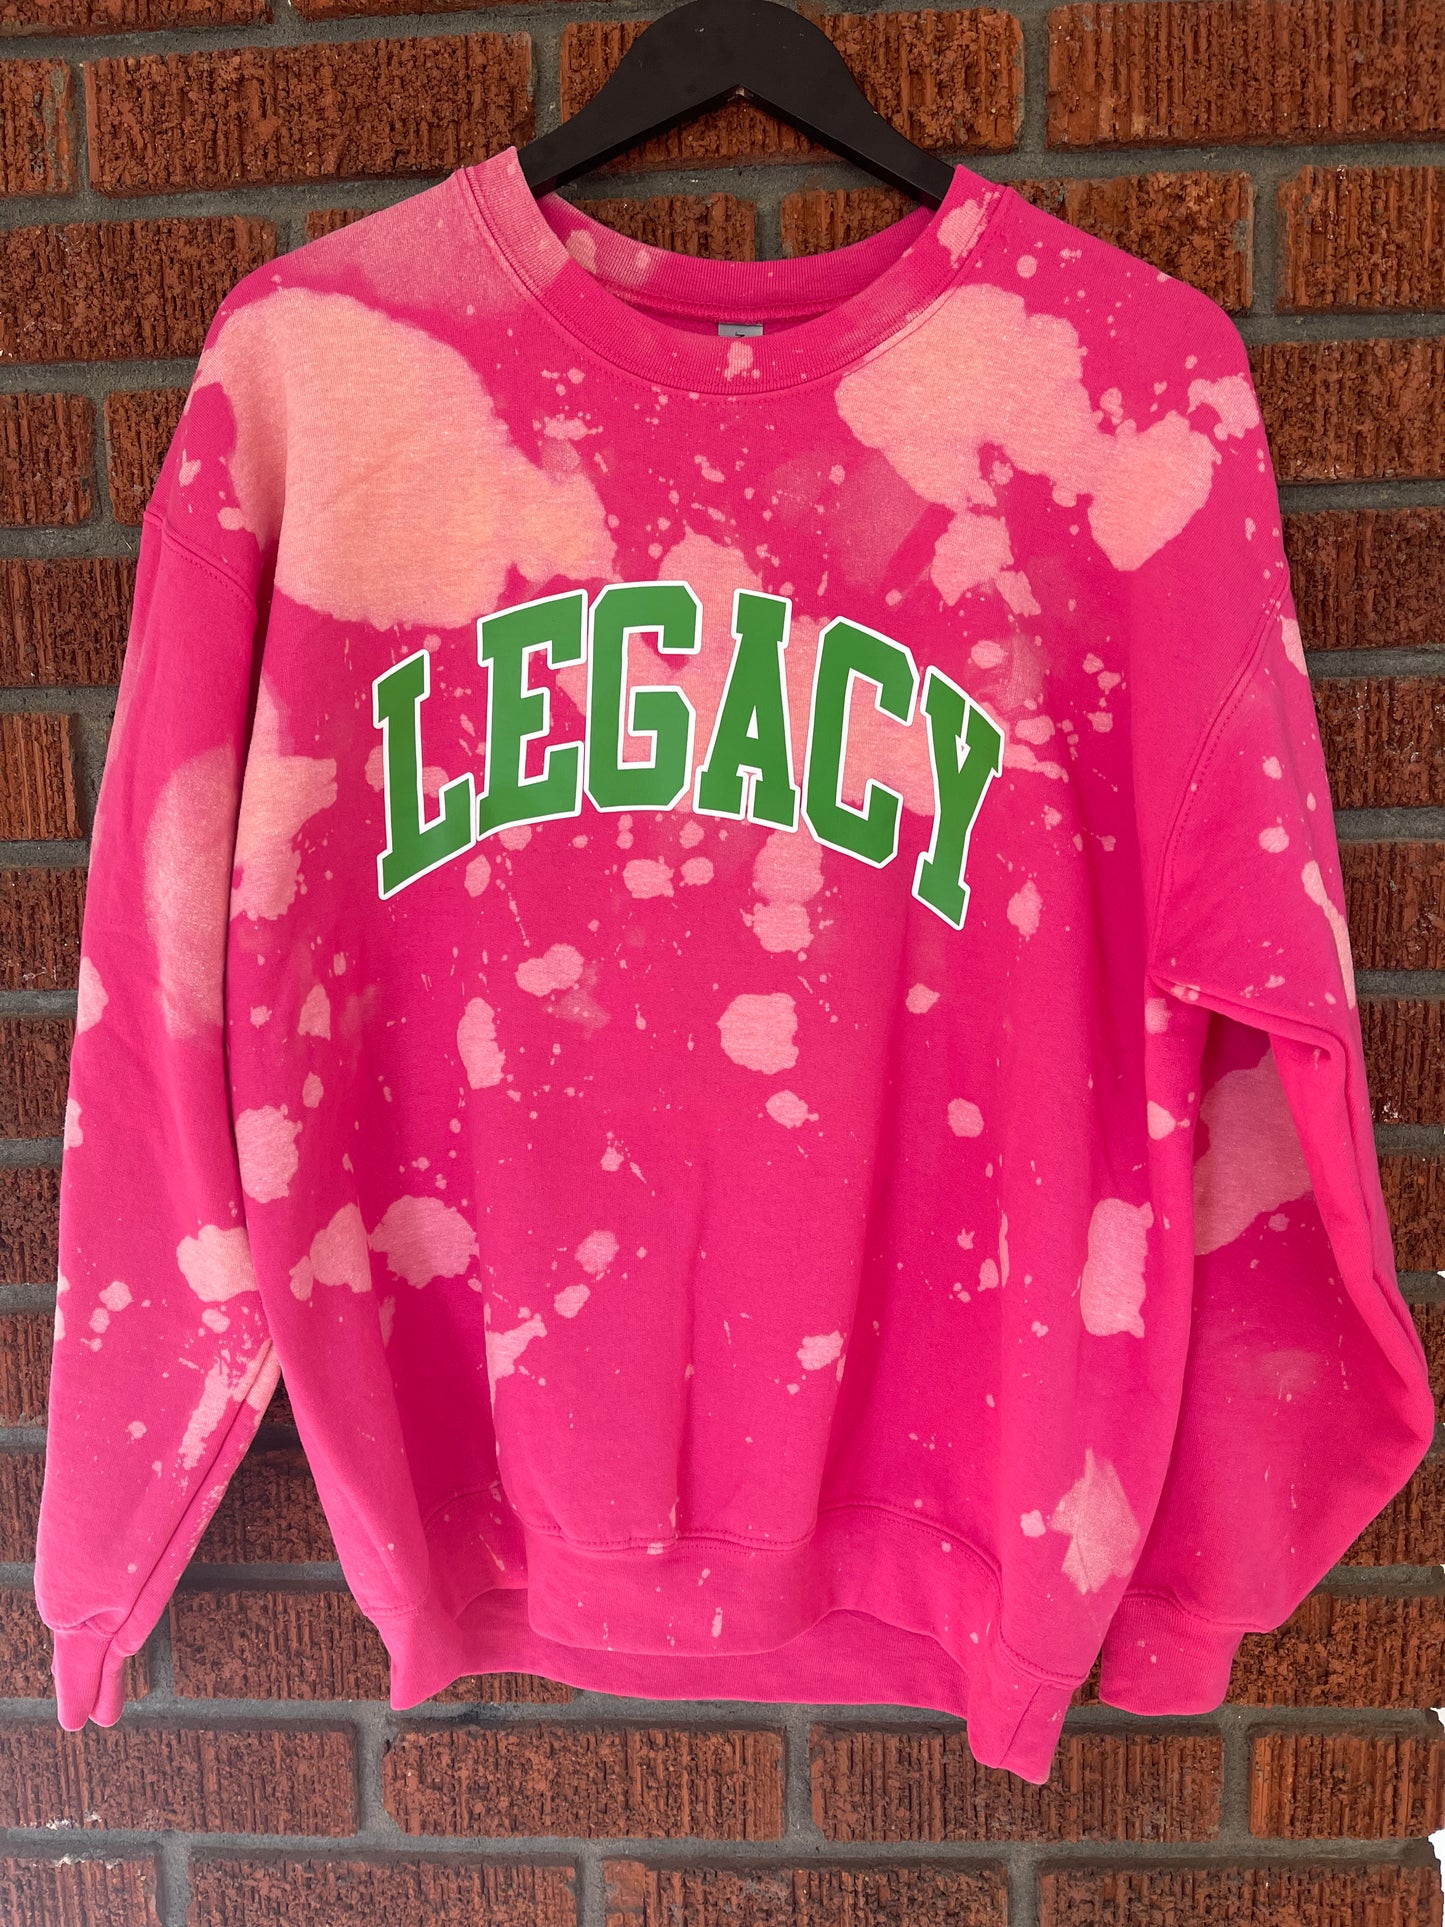 The Handmade Legacy Crew Neck Sweatshirt - [CCL Designs] - AKA Alpha Kappa Alpha Pink and Green handmade hand bleach tie dye